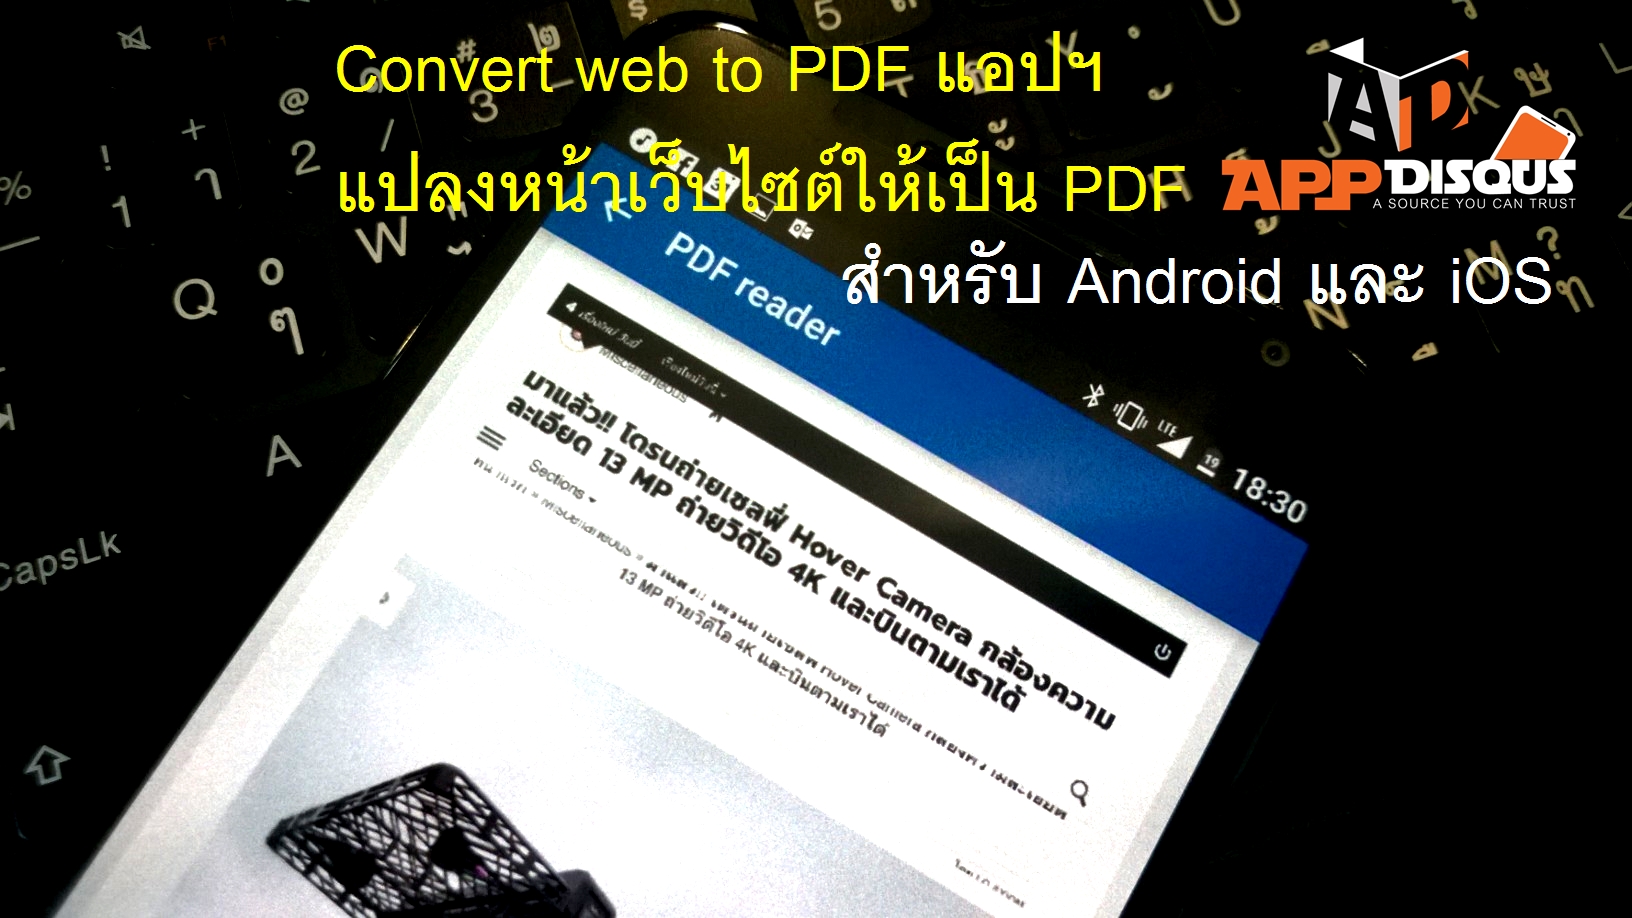 WP 20160503 08 28 28 Pro | Android | Convert web to PDF แอปฯ แปลงหน้าเว็บไซต์ให้เป็น PDF เก็บไว้อ่านออฟไลน์ สำหรับ Android และ iOS